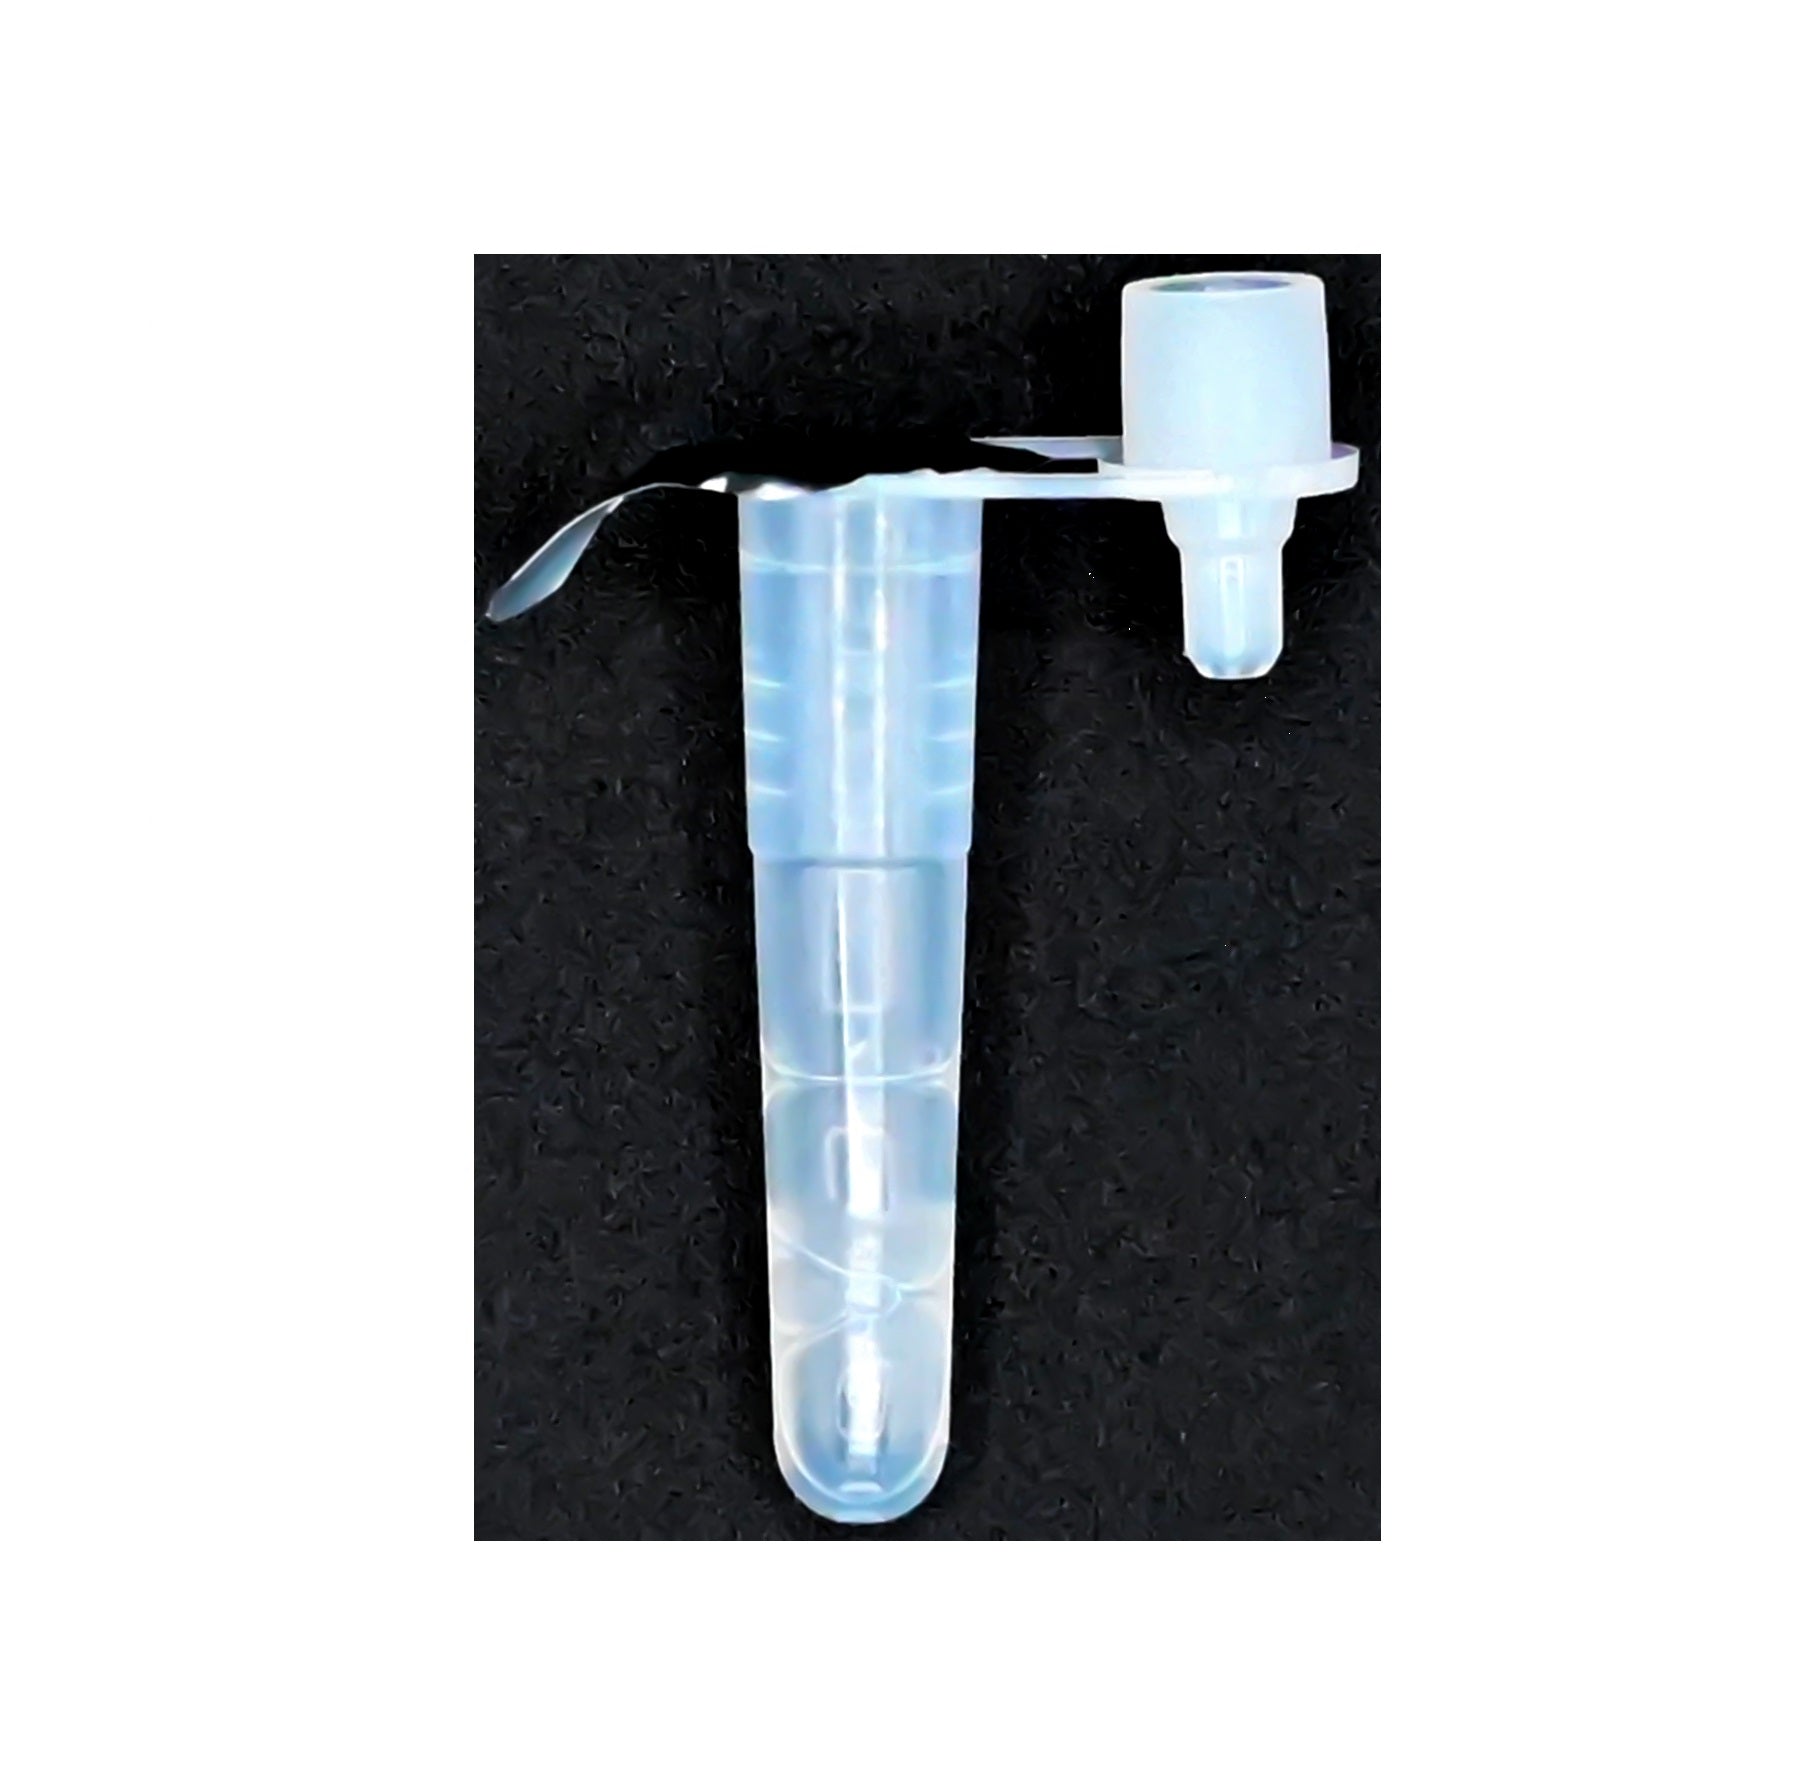 A Covid-19 Antigen Rapid Test Device tube